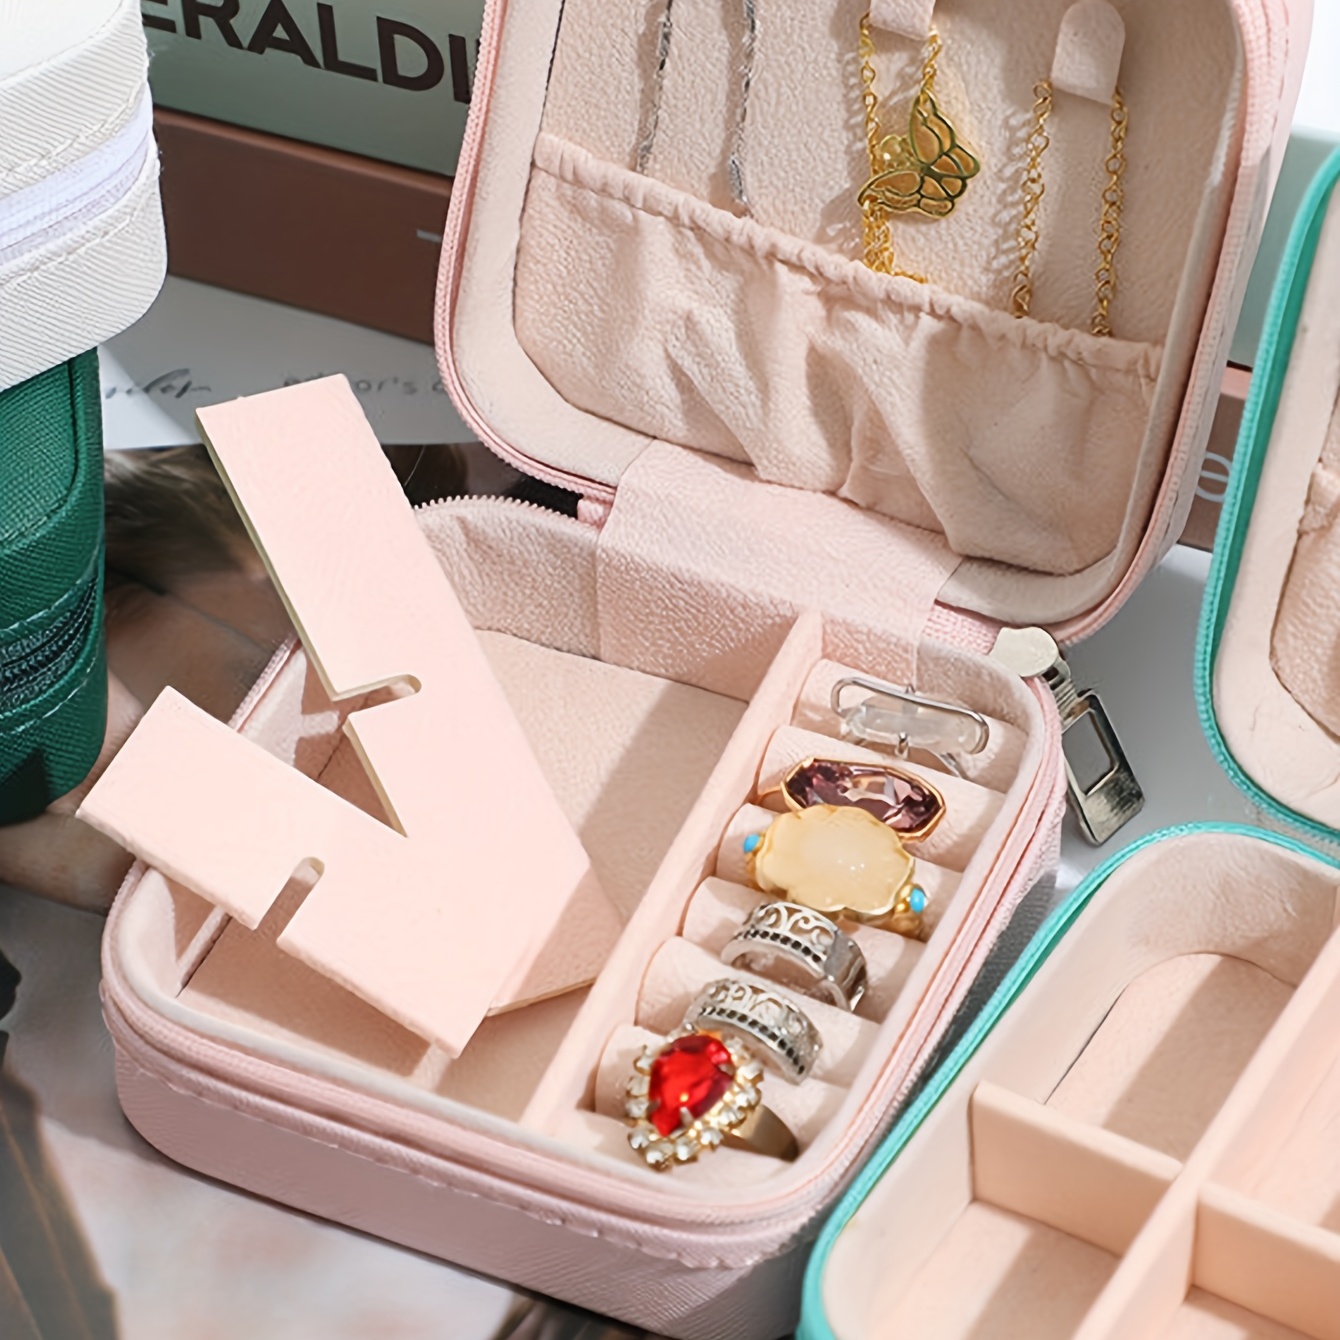 Portable Travel Jewelry Box Organizer - Small Jewelry Case For Travel